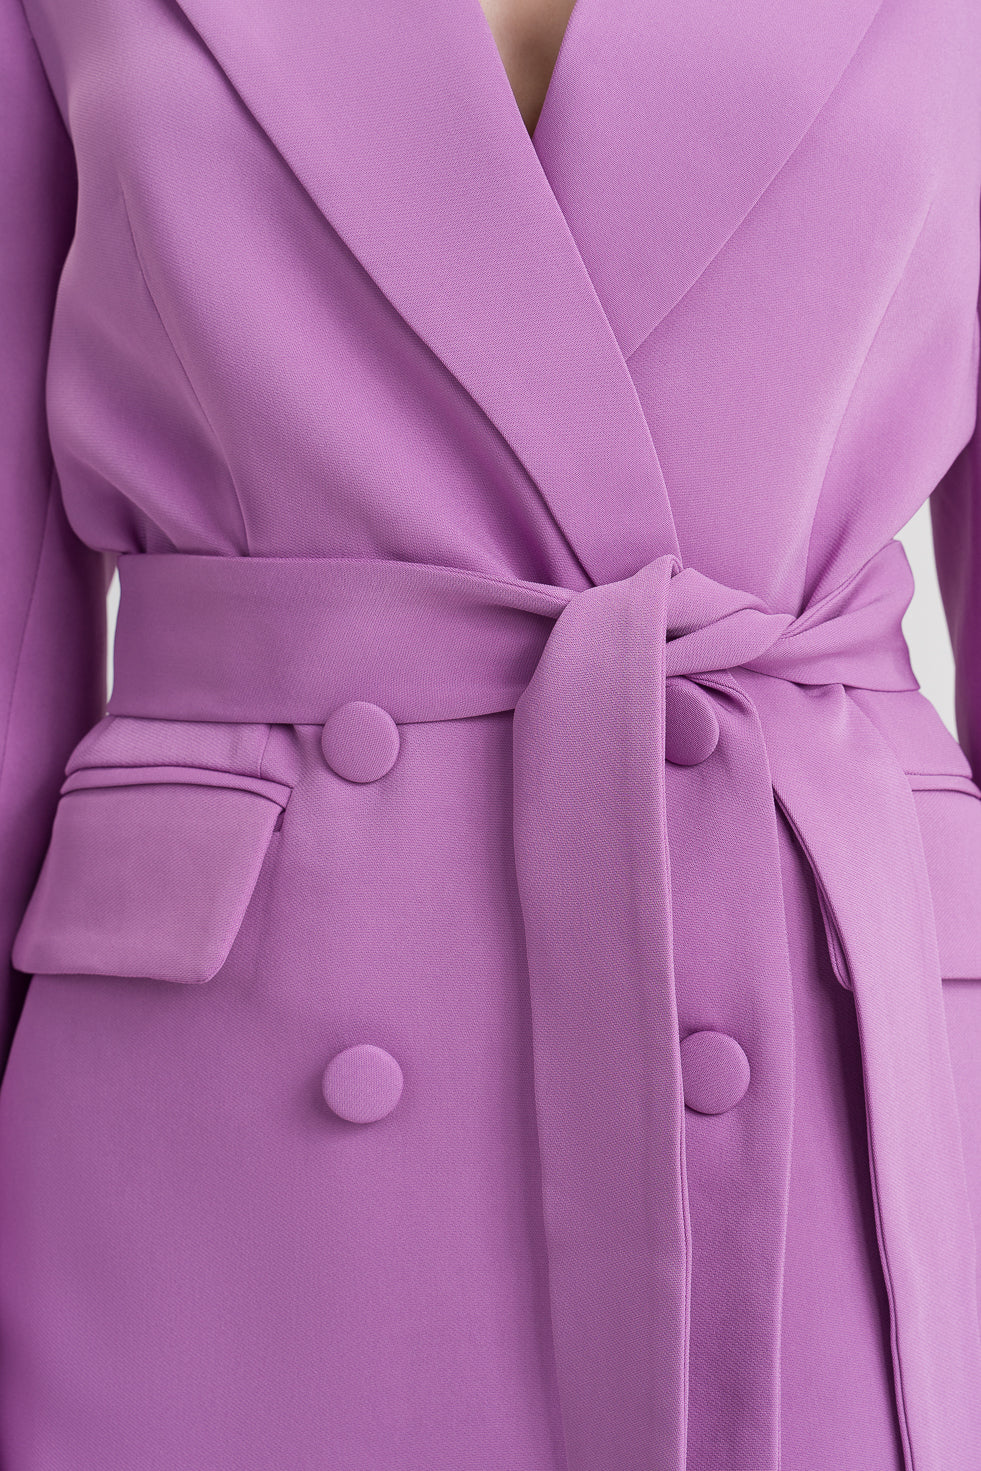 Iro  Purple Cotton blend embellished suit blazer